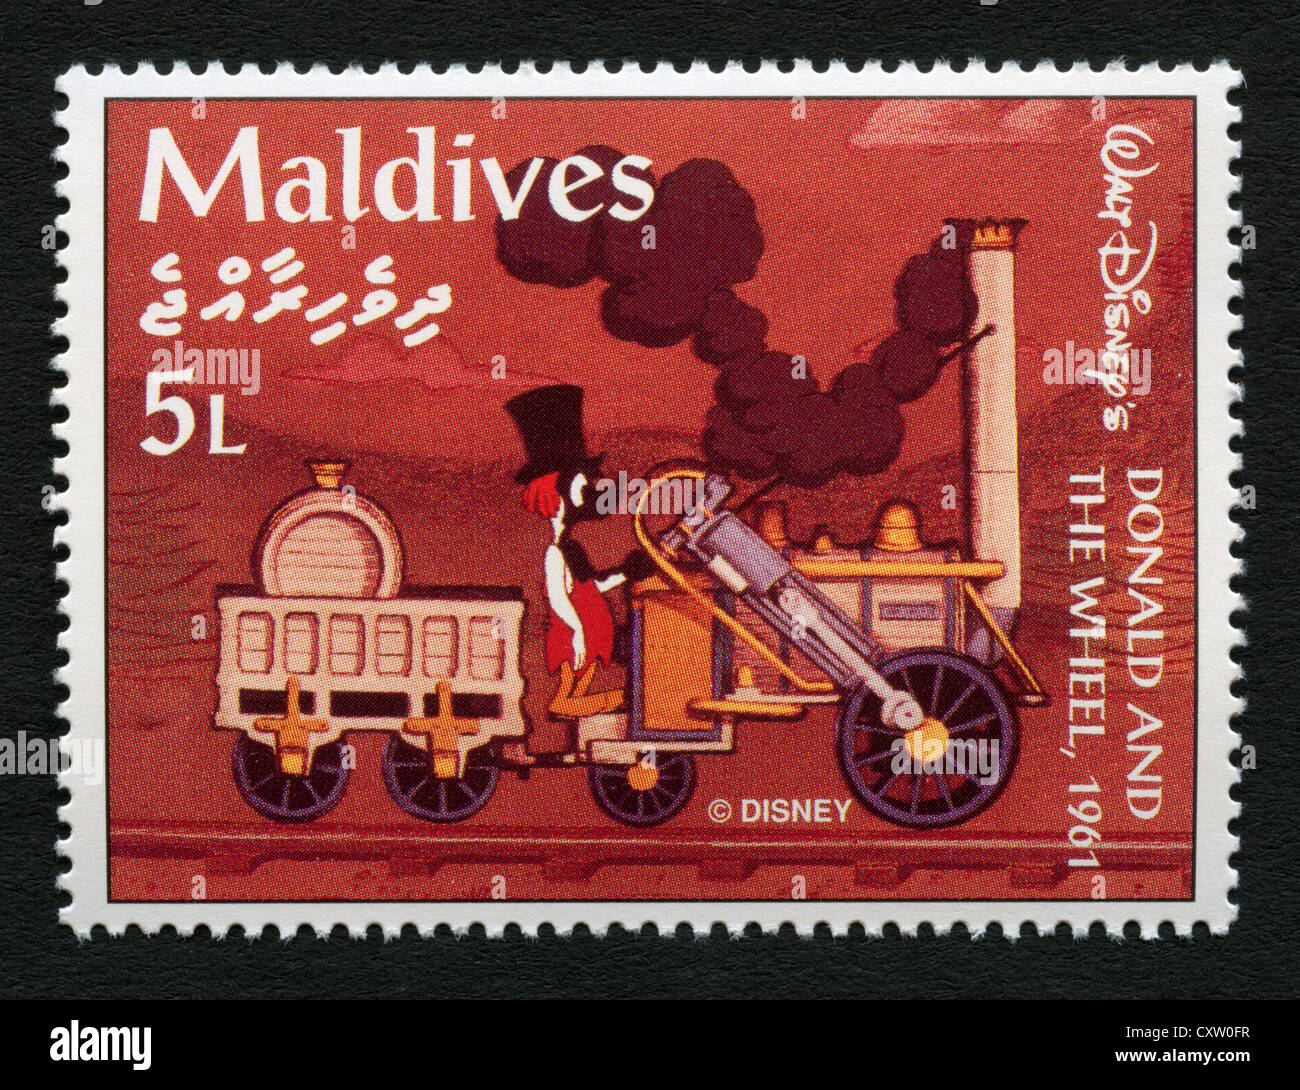 Maldives postage stamp - Disney cartoon characters Stock Photo